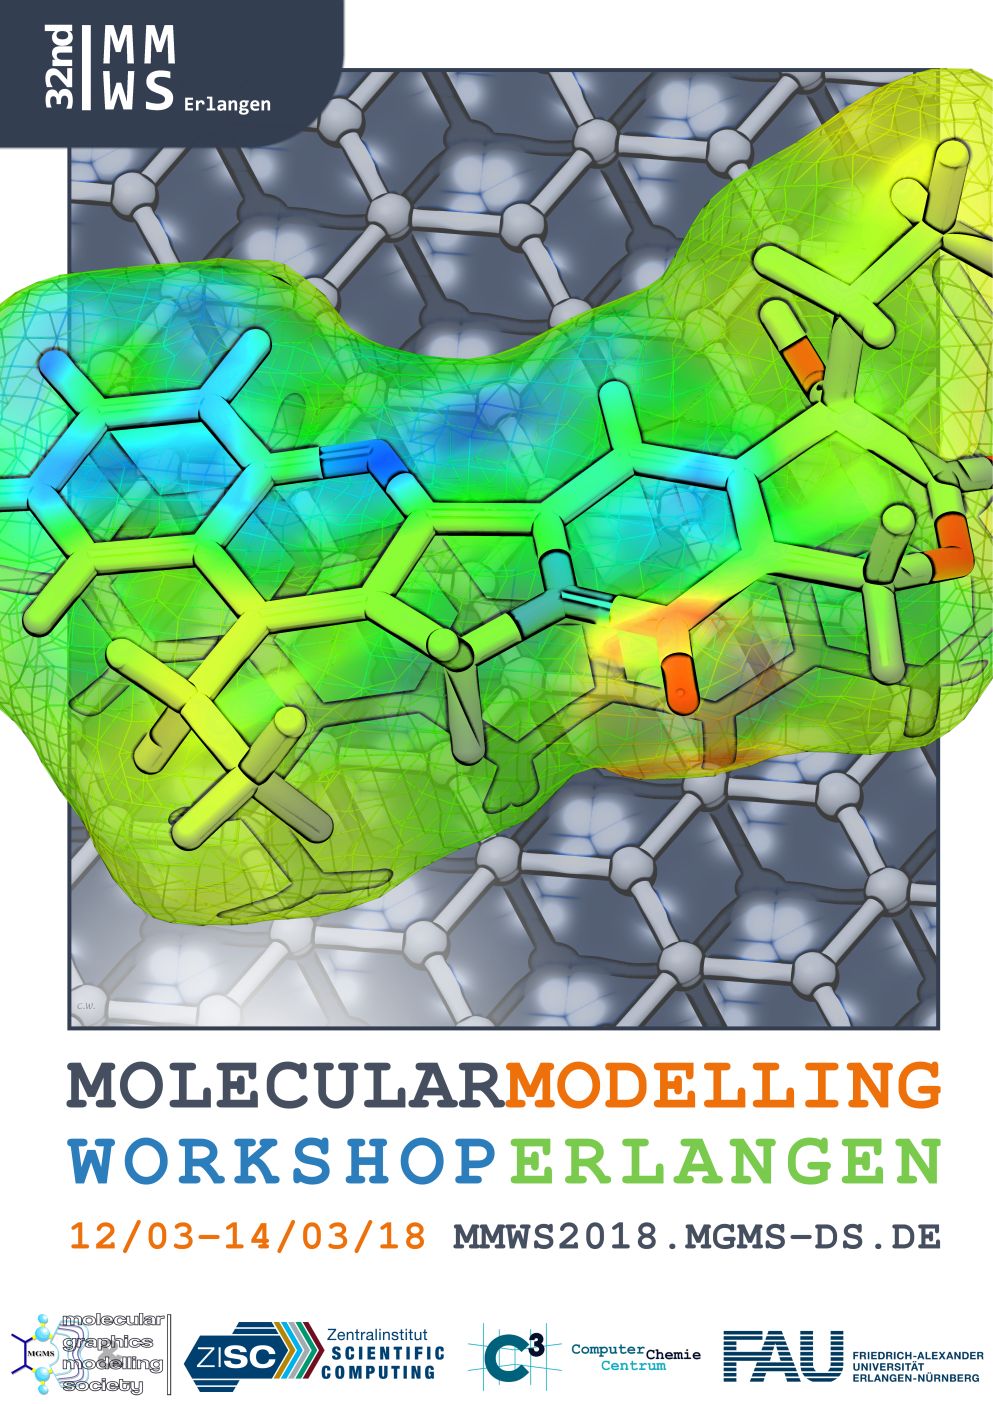 Towards entry "32nd Molecular Modelling Workshop (MMWS) in Erlangen"